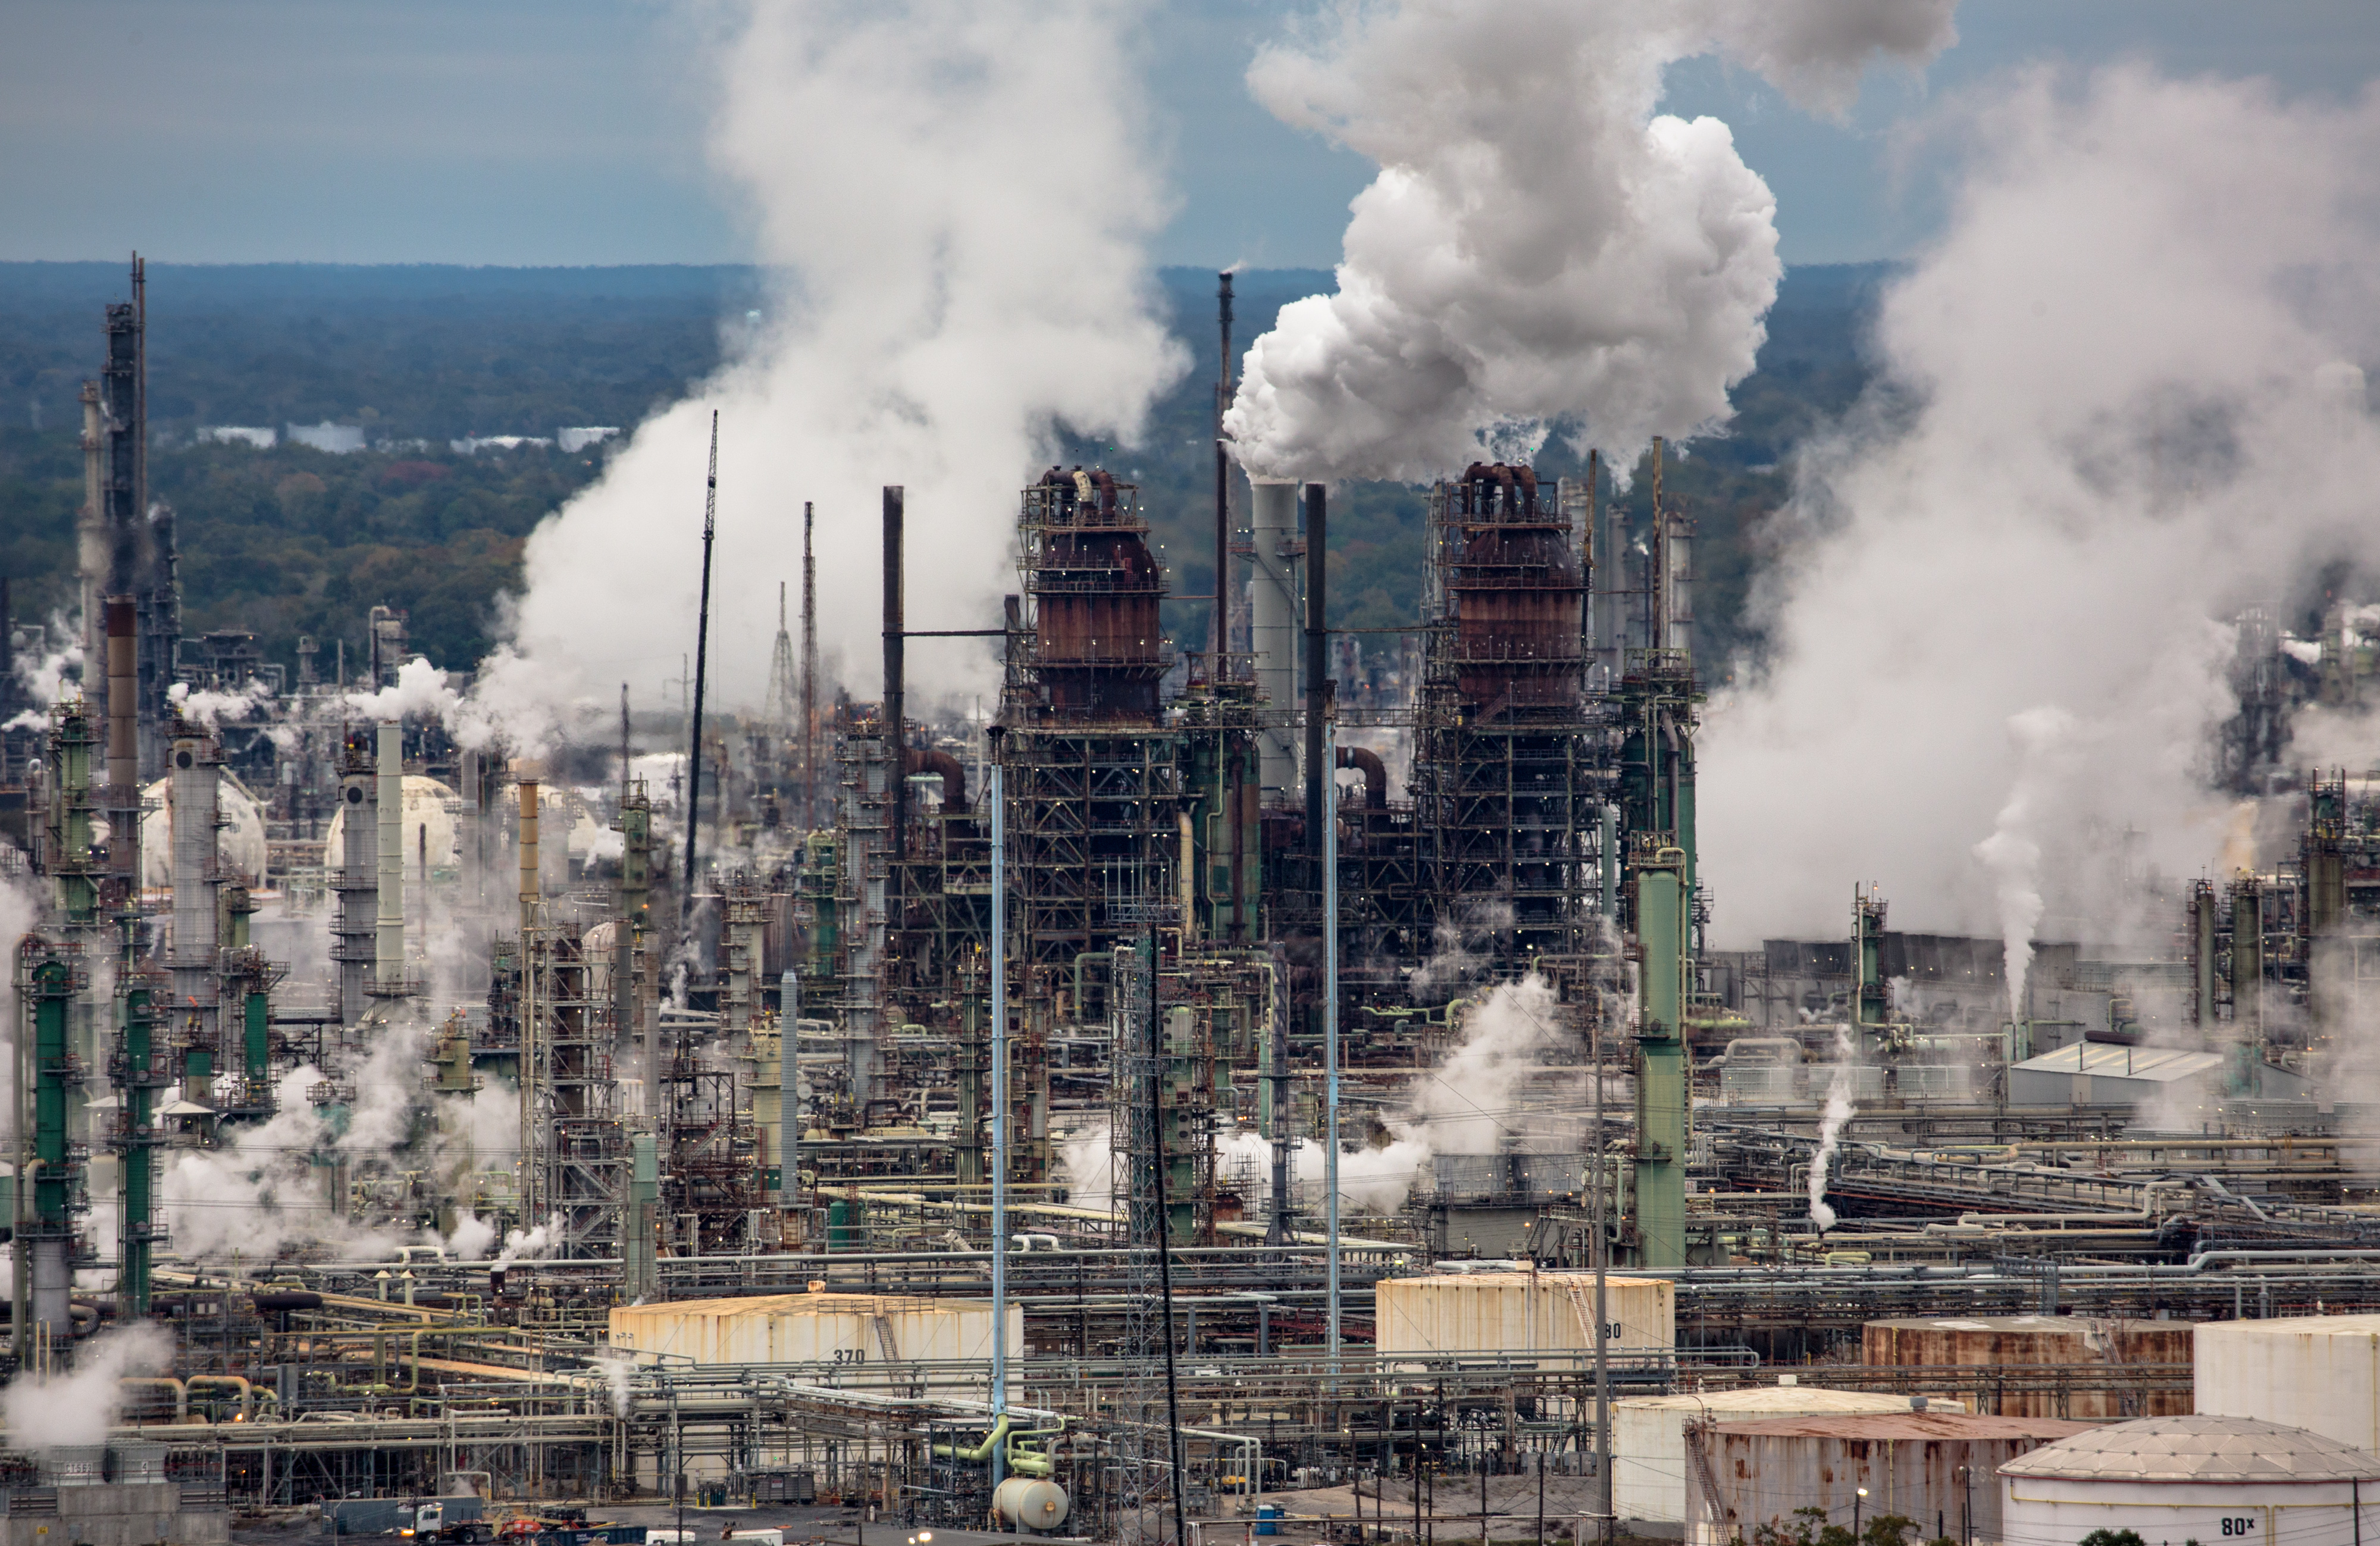 Exxon's Baton Rouge Facilities in Louisiana's 'Cancer Alley' - Photographer Julie Dermansky